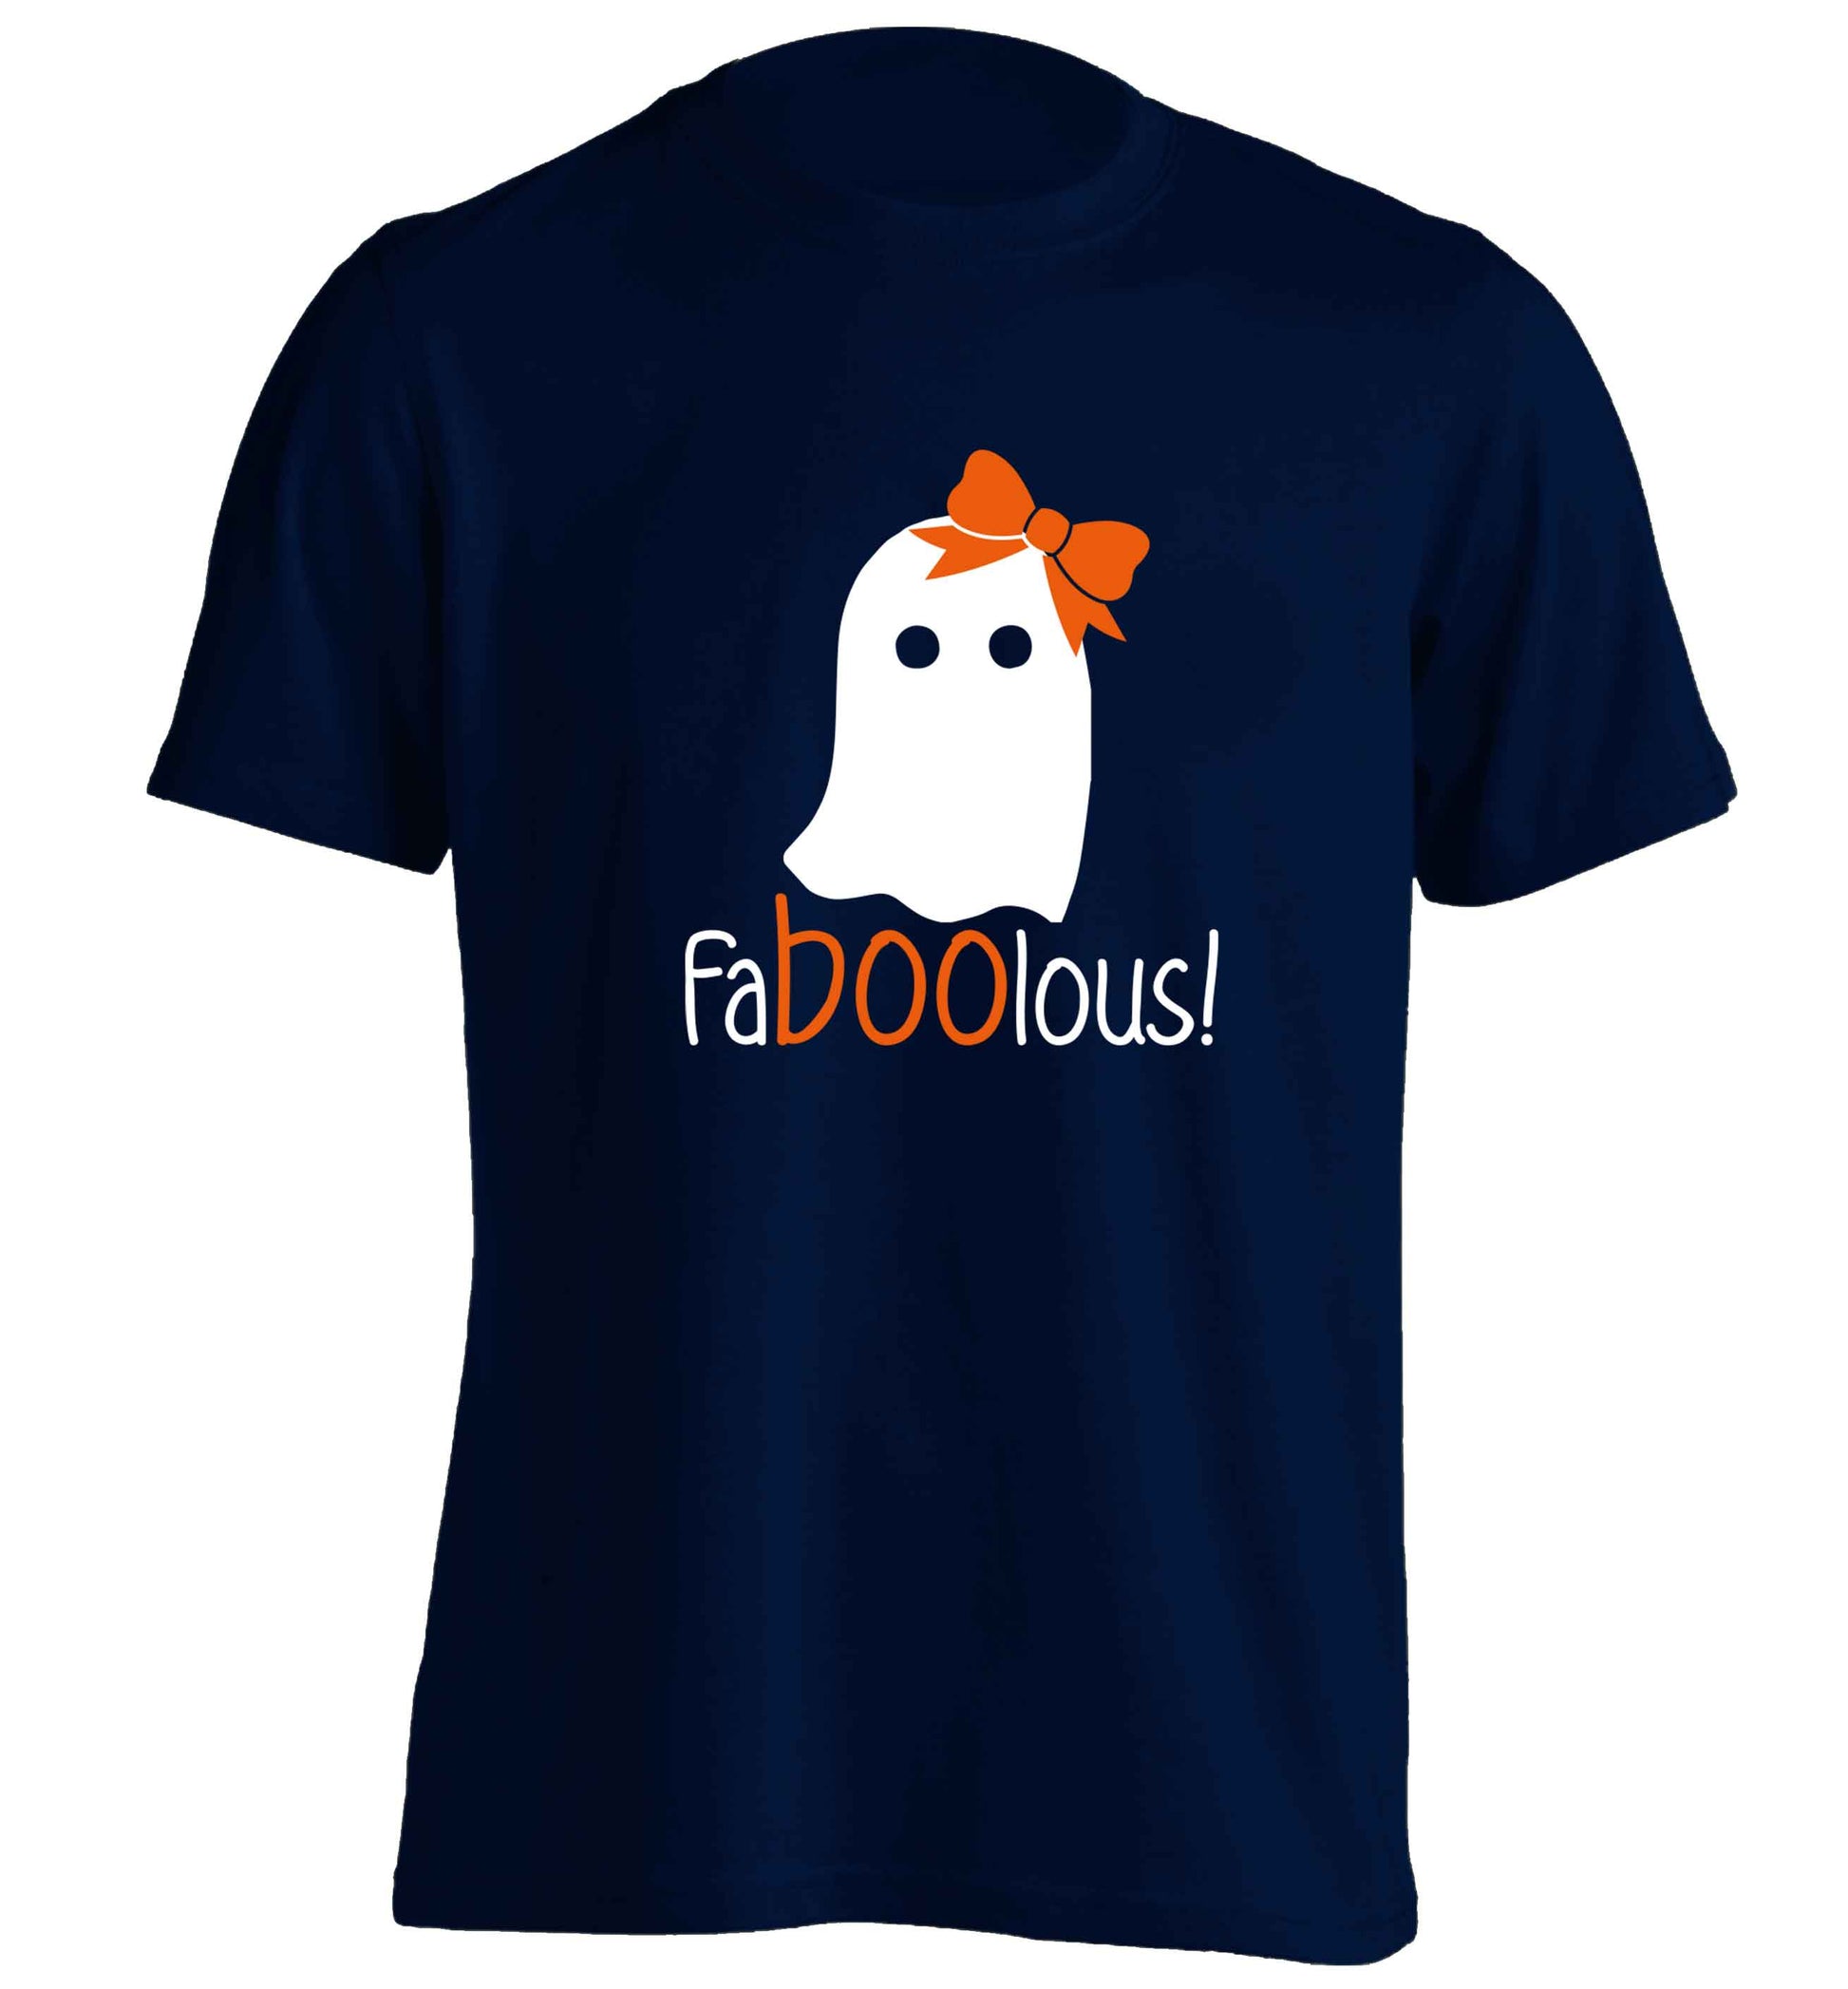 Faboolous ghost adults unisex navy Tshirt 2XL